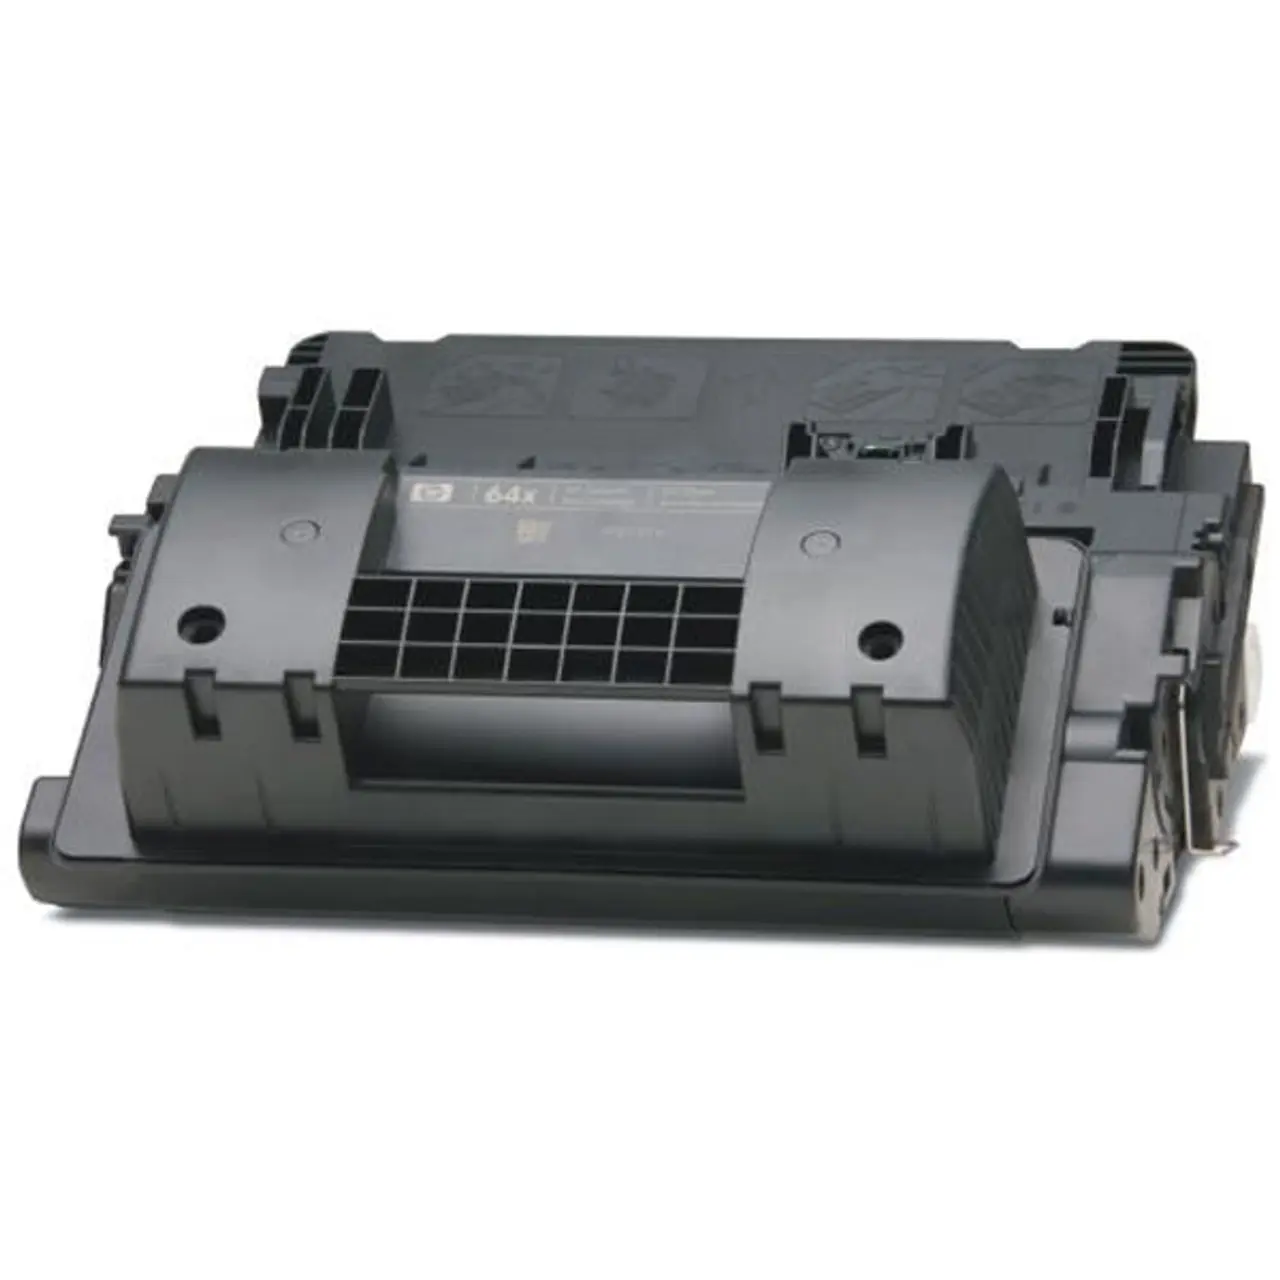 hewlett-packard laserjet p4015n dual printer - What is the spec of P4015